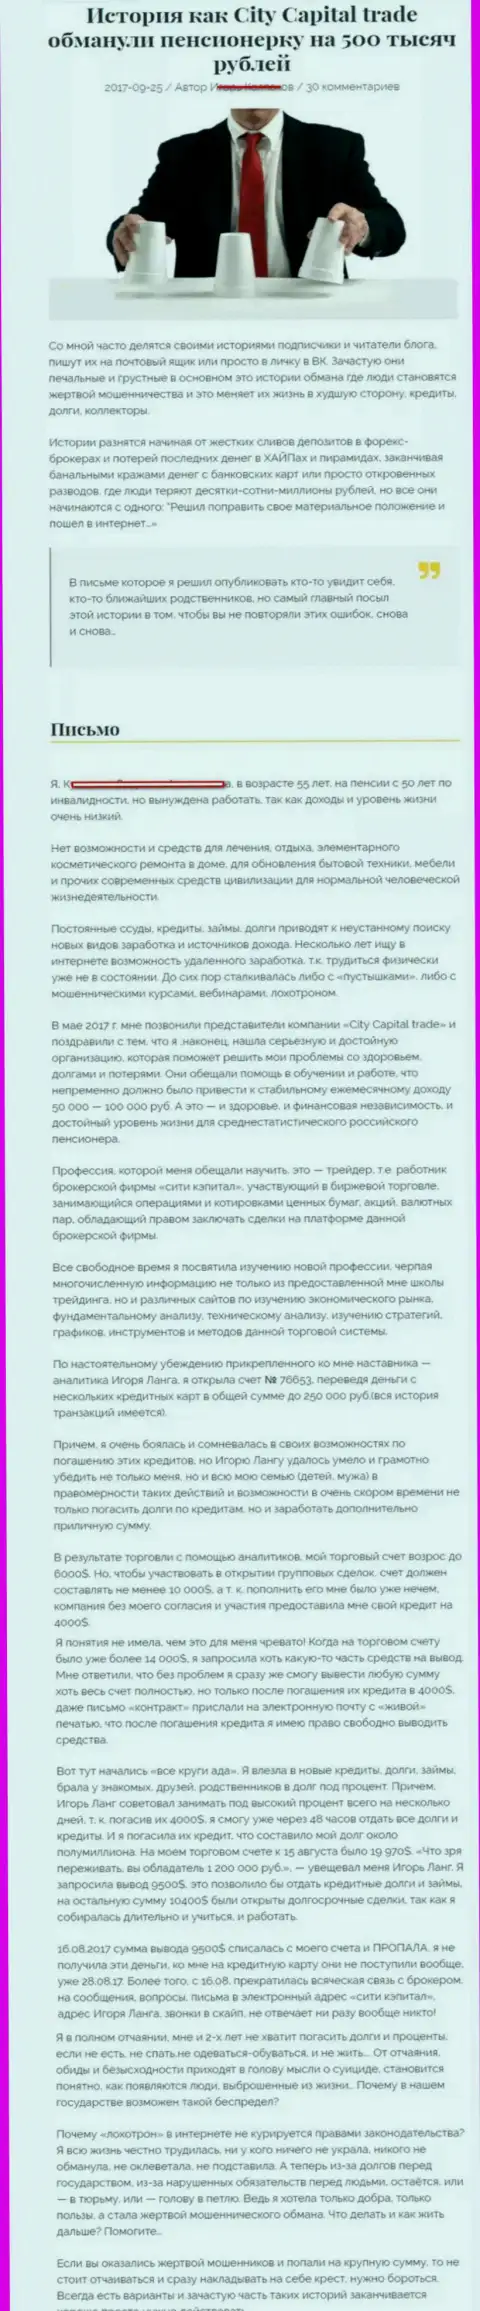 СитиКапитал Трейд ограбили клиентку пенсионного возраста - инвалида на 500000 рублей - ОБМАНЩИКИ !!!